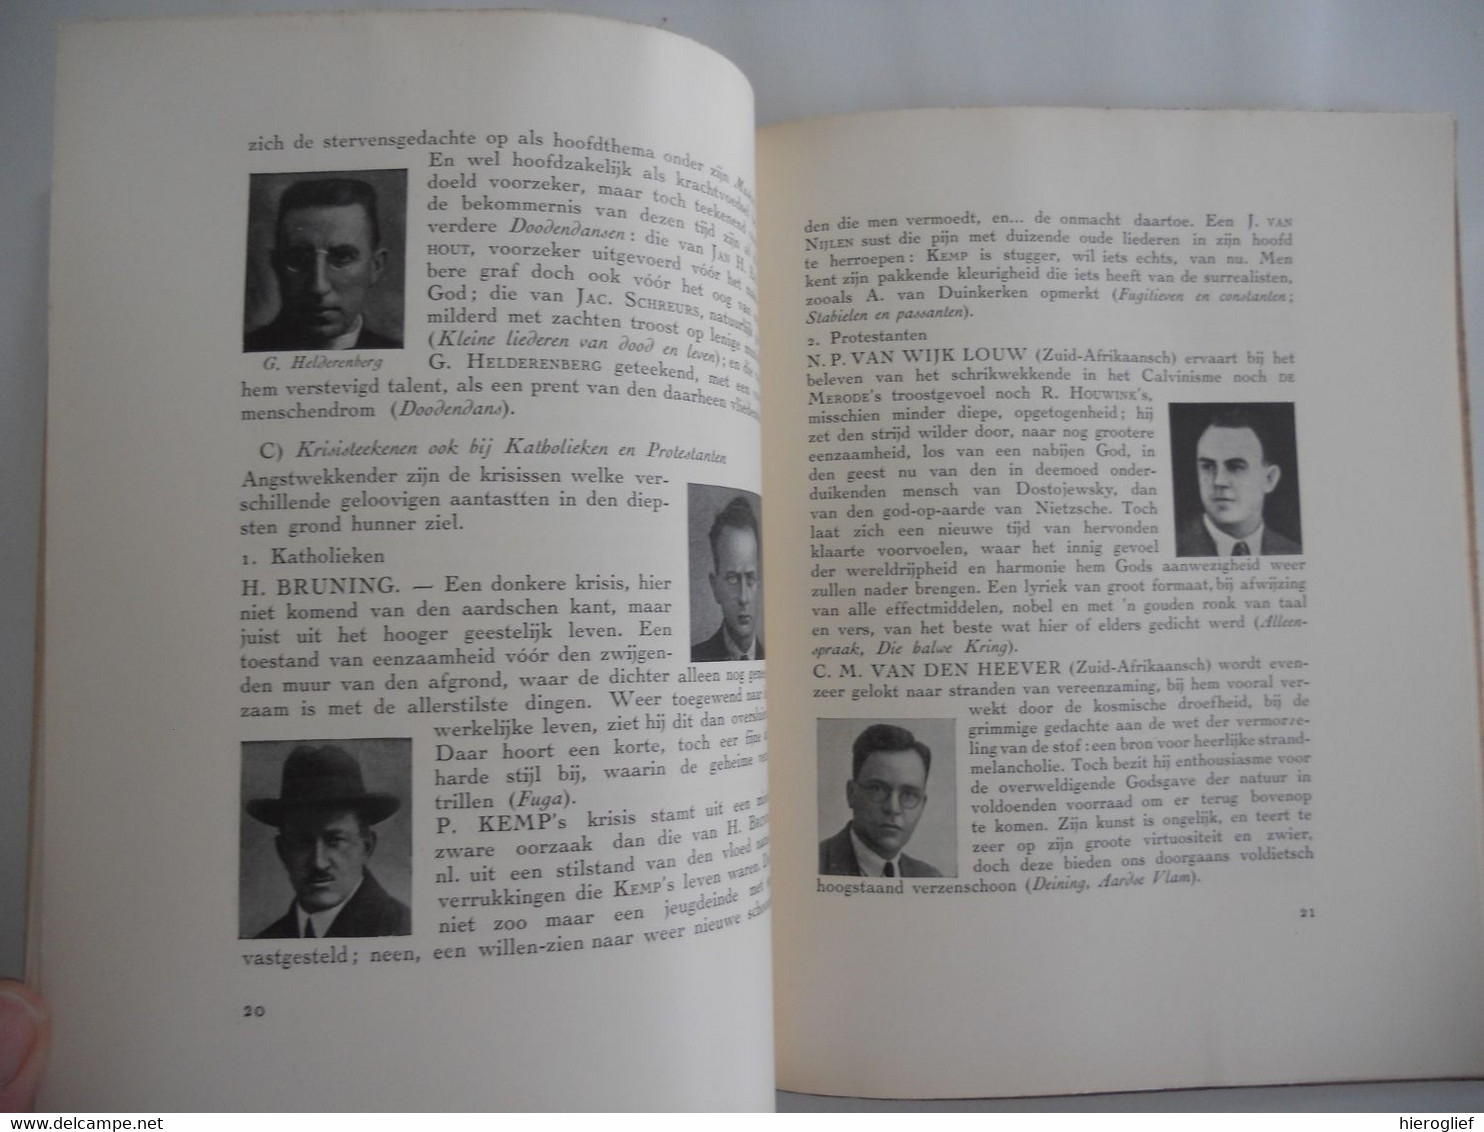 GALERIJ DICHTERS  1930 1940 Nederland Vlaanderen Zuid-Afrika Door Dr. Caeymaex Albe Gilliams Coole Peleman Vertommen - Dichtung